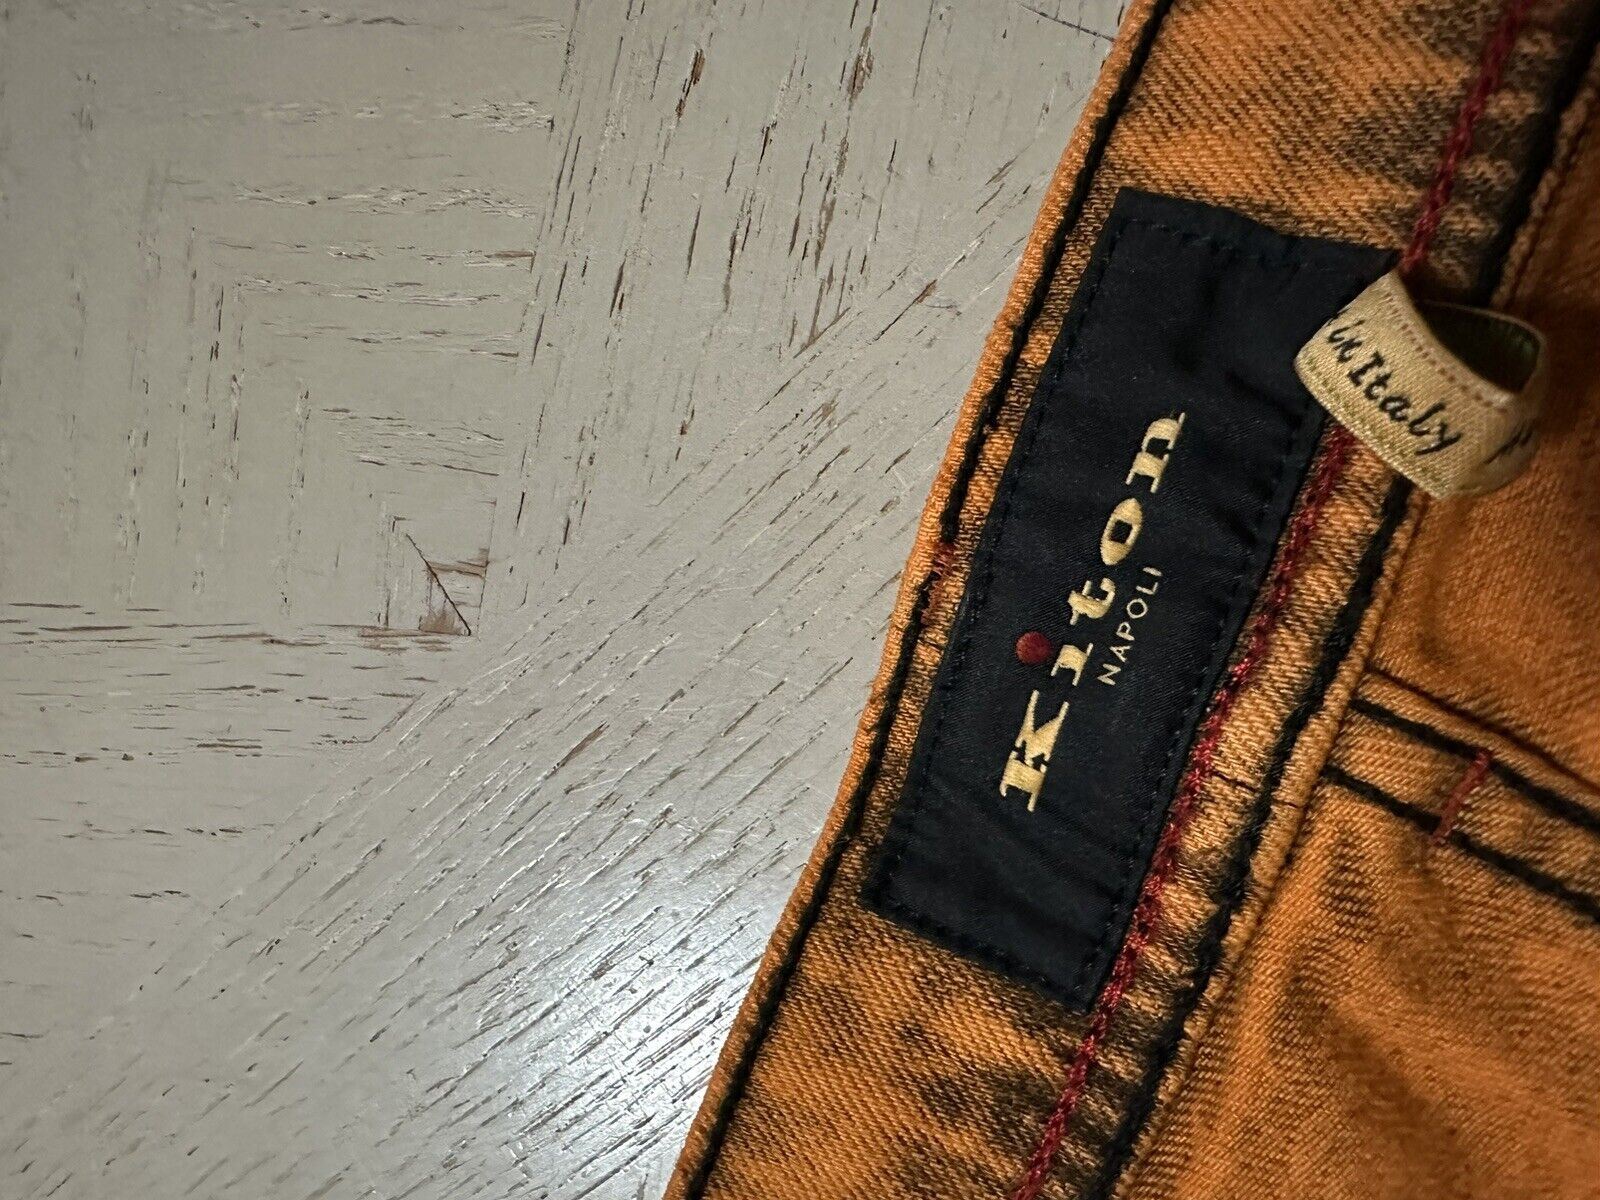 Neu mit Etikett: 1895 $ Kiton Dyed Contrast Stitch Skinny Jeans Hose Orange 34 US/50 Eu